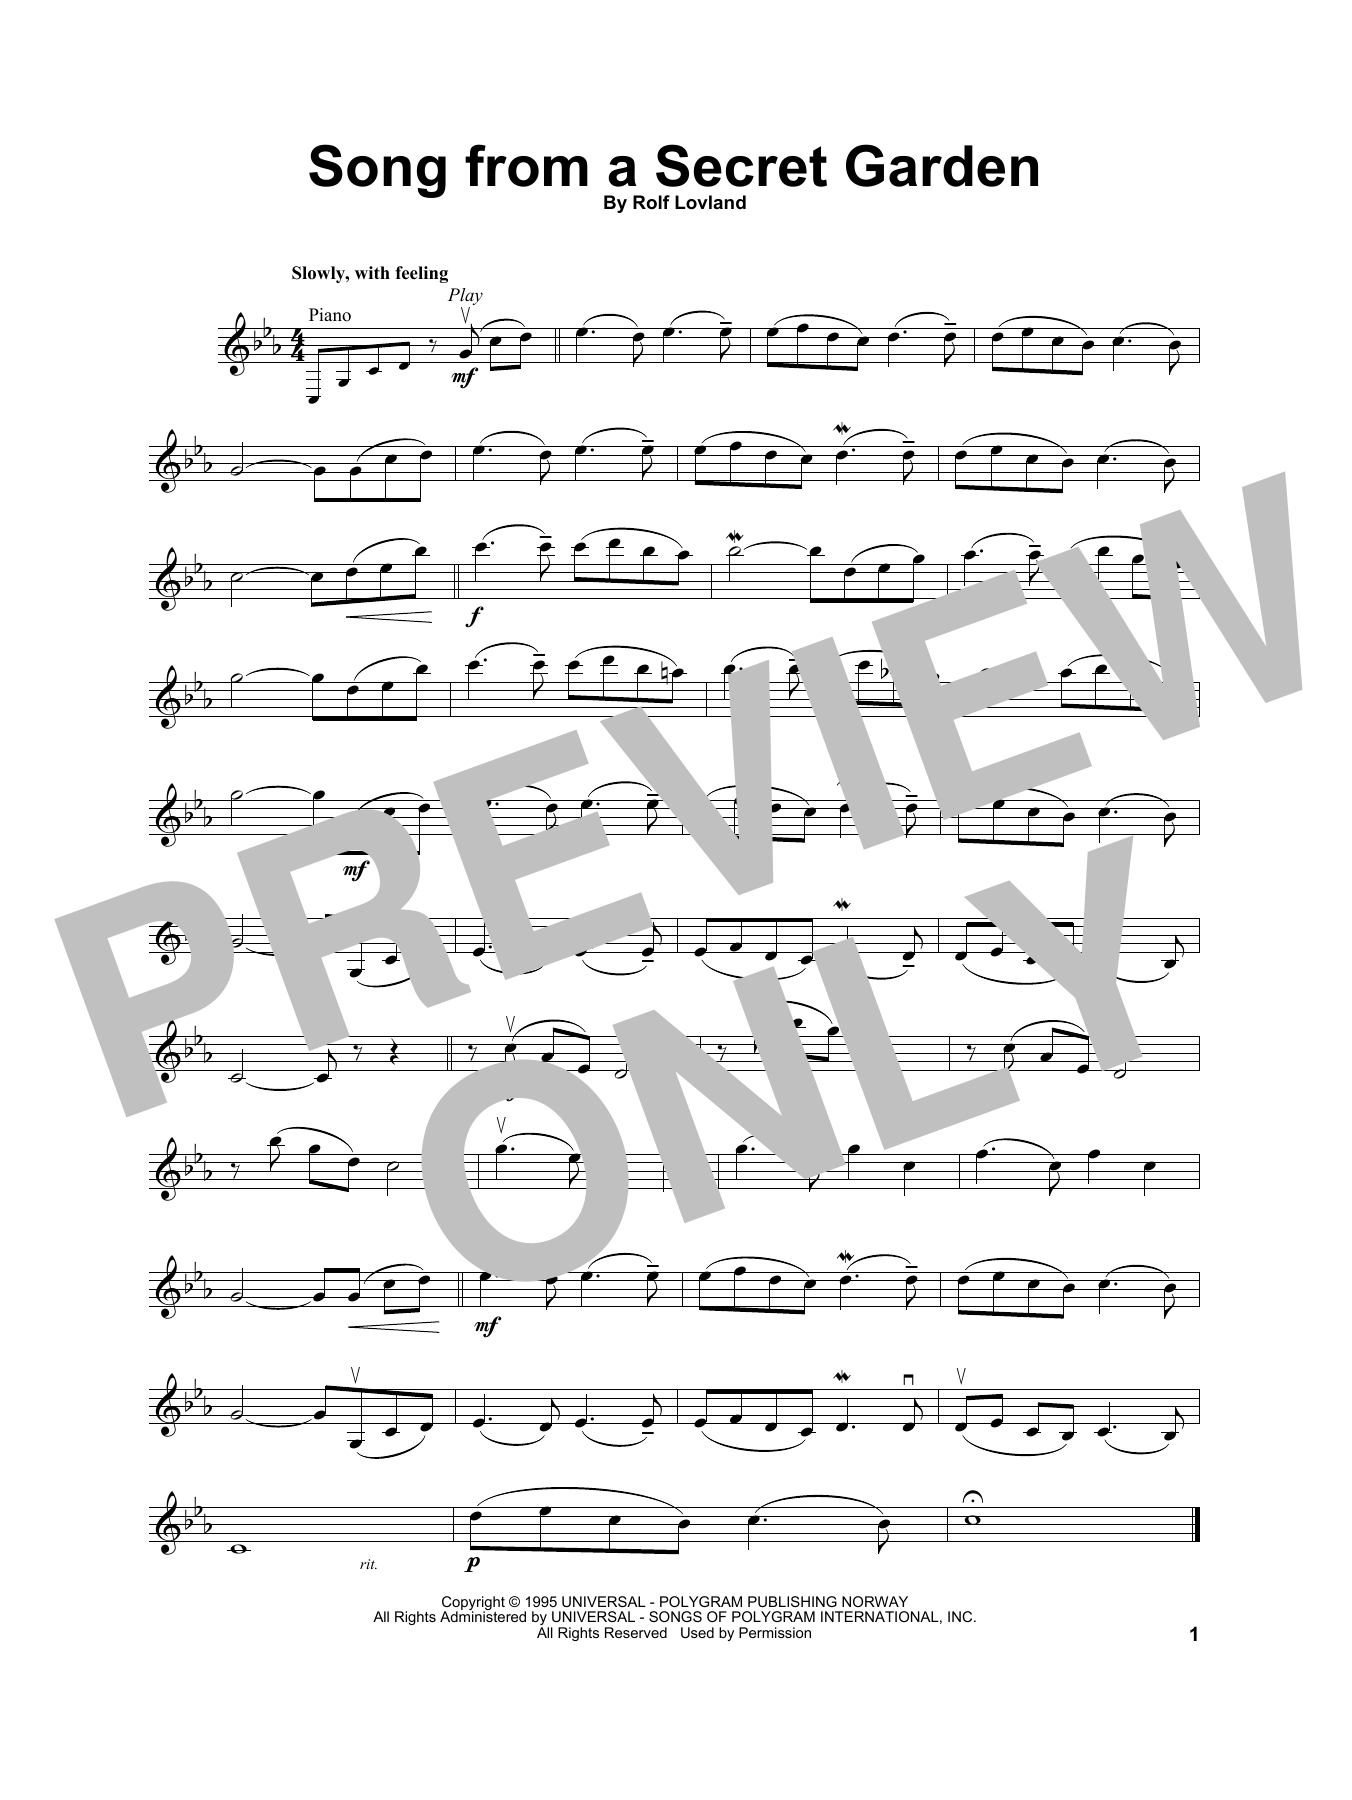 Secret Garden Song From A Secret Garden Sheet Music Notes & Chords for Tenor Sax Solo - Download or Print PDF